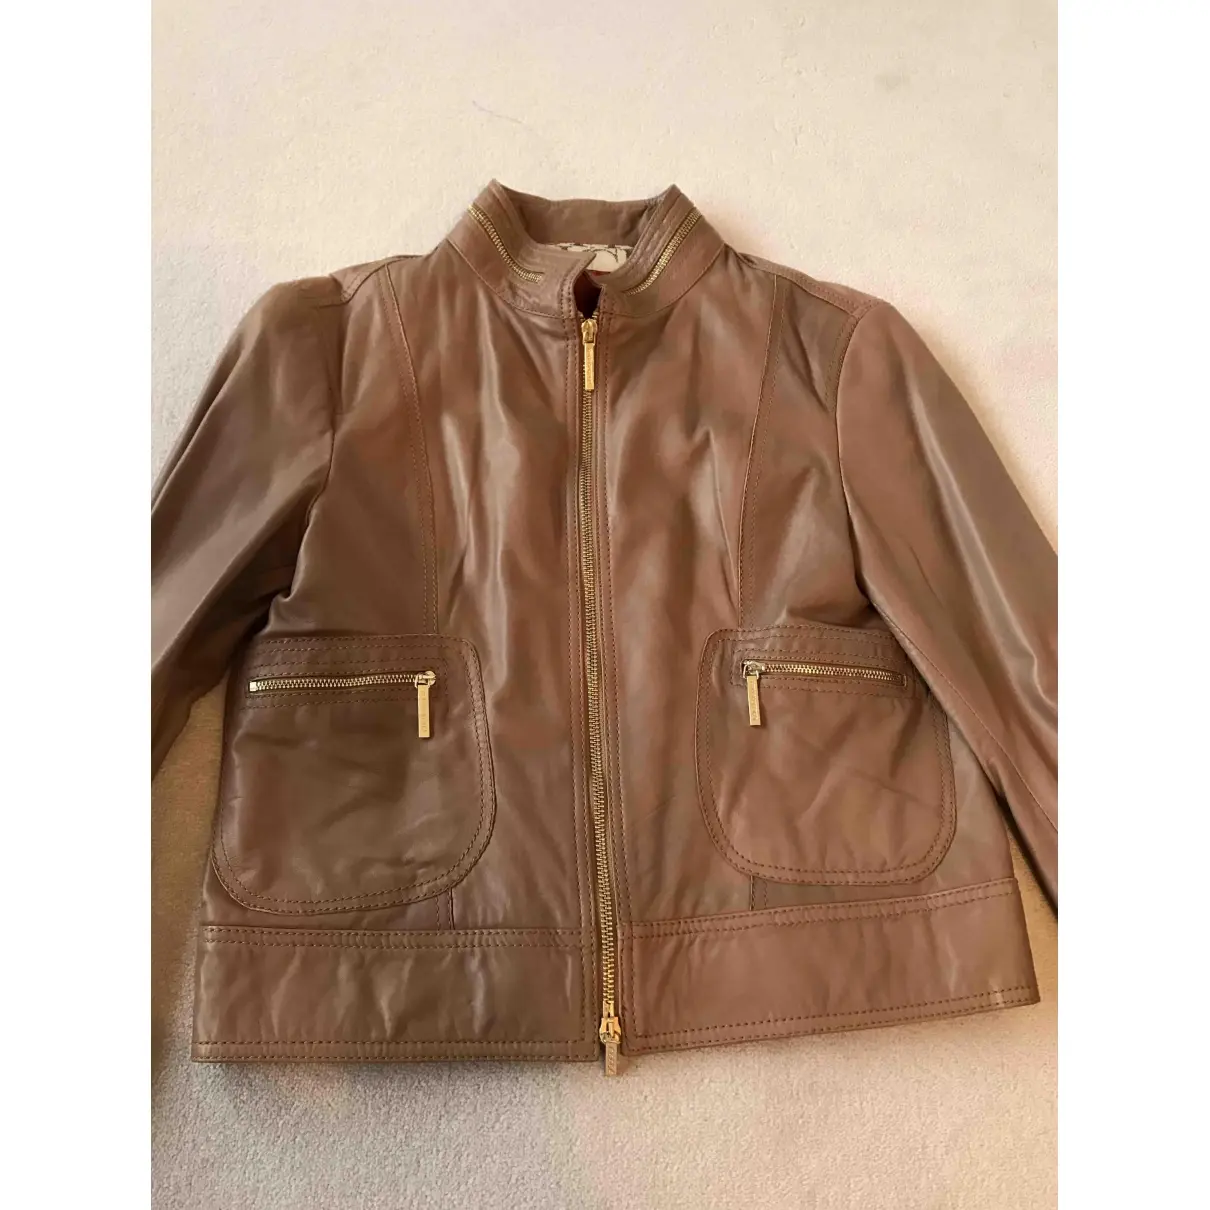 Buy Carolina Herrera Leather biker jacket online